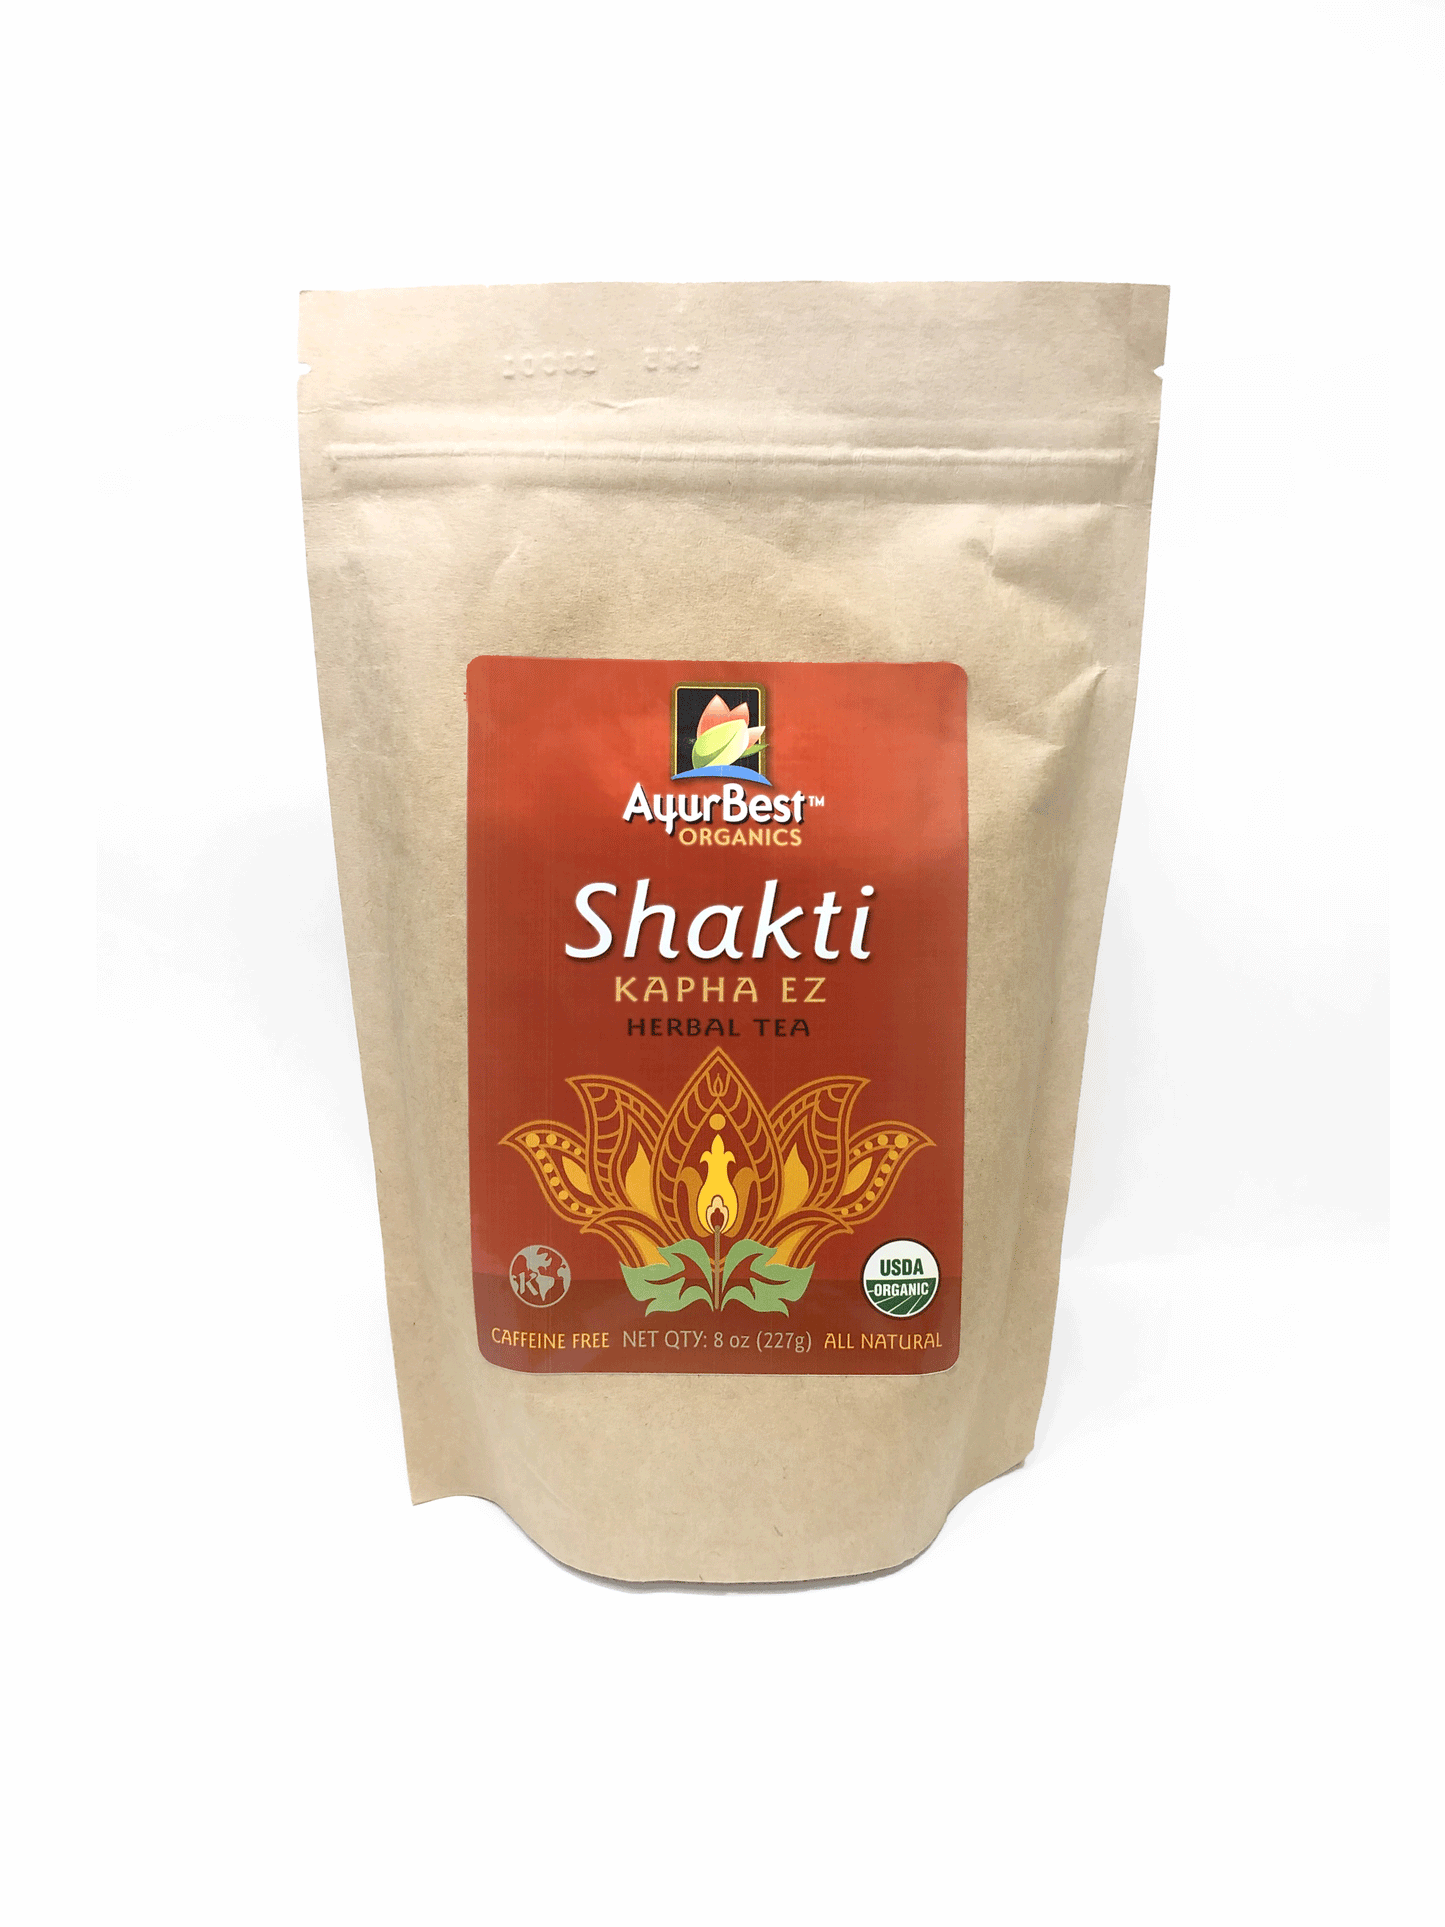 Organic Shakti Herbal Tea, available in 8oz size!